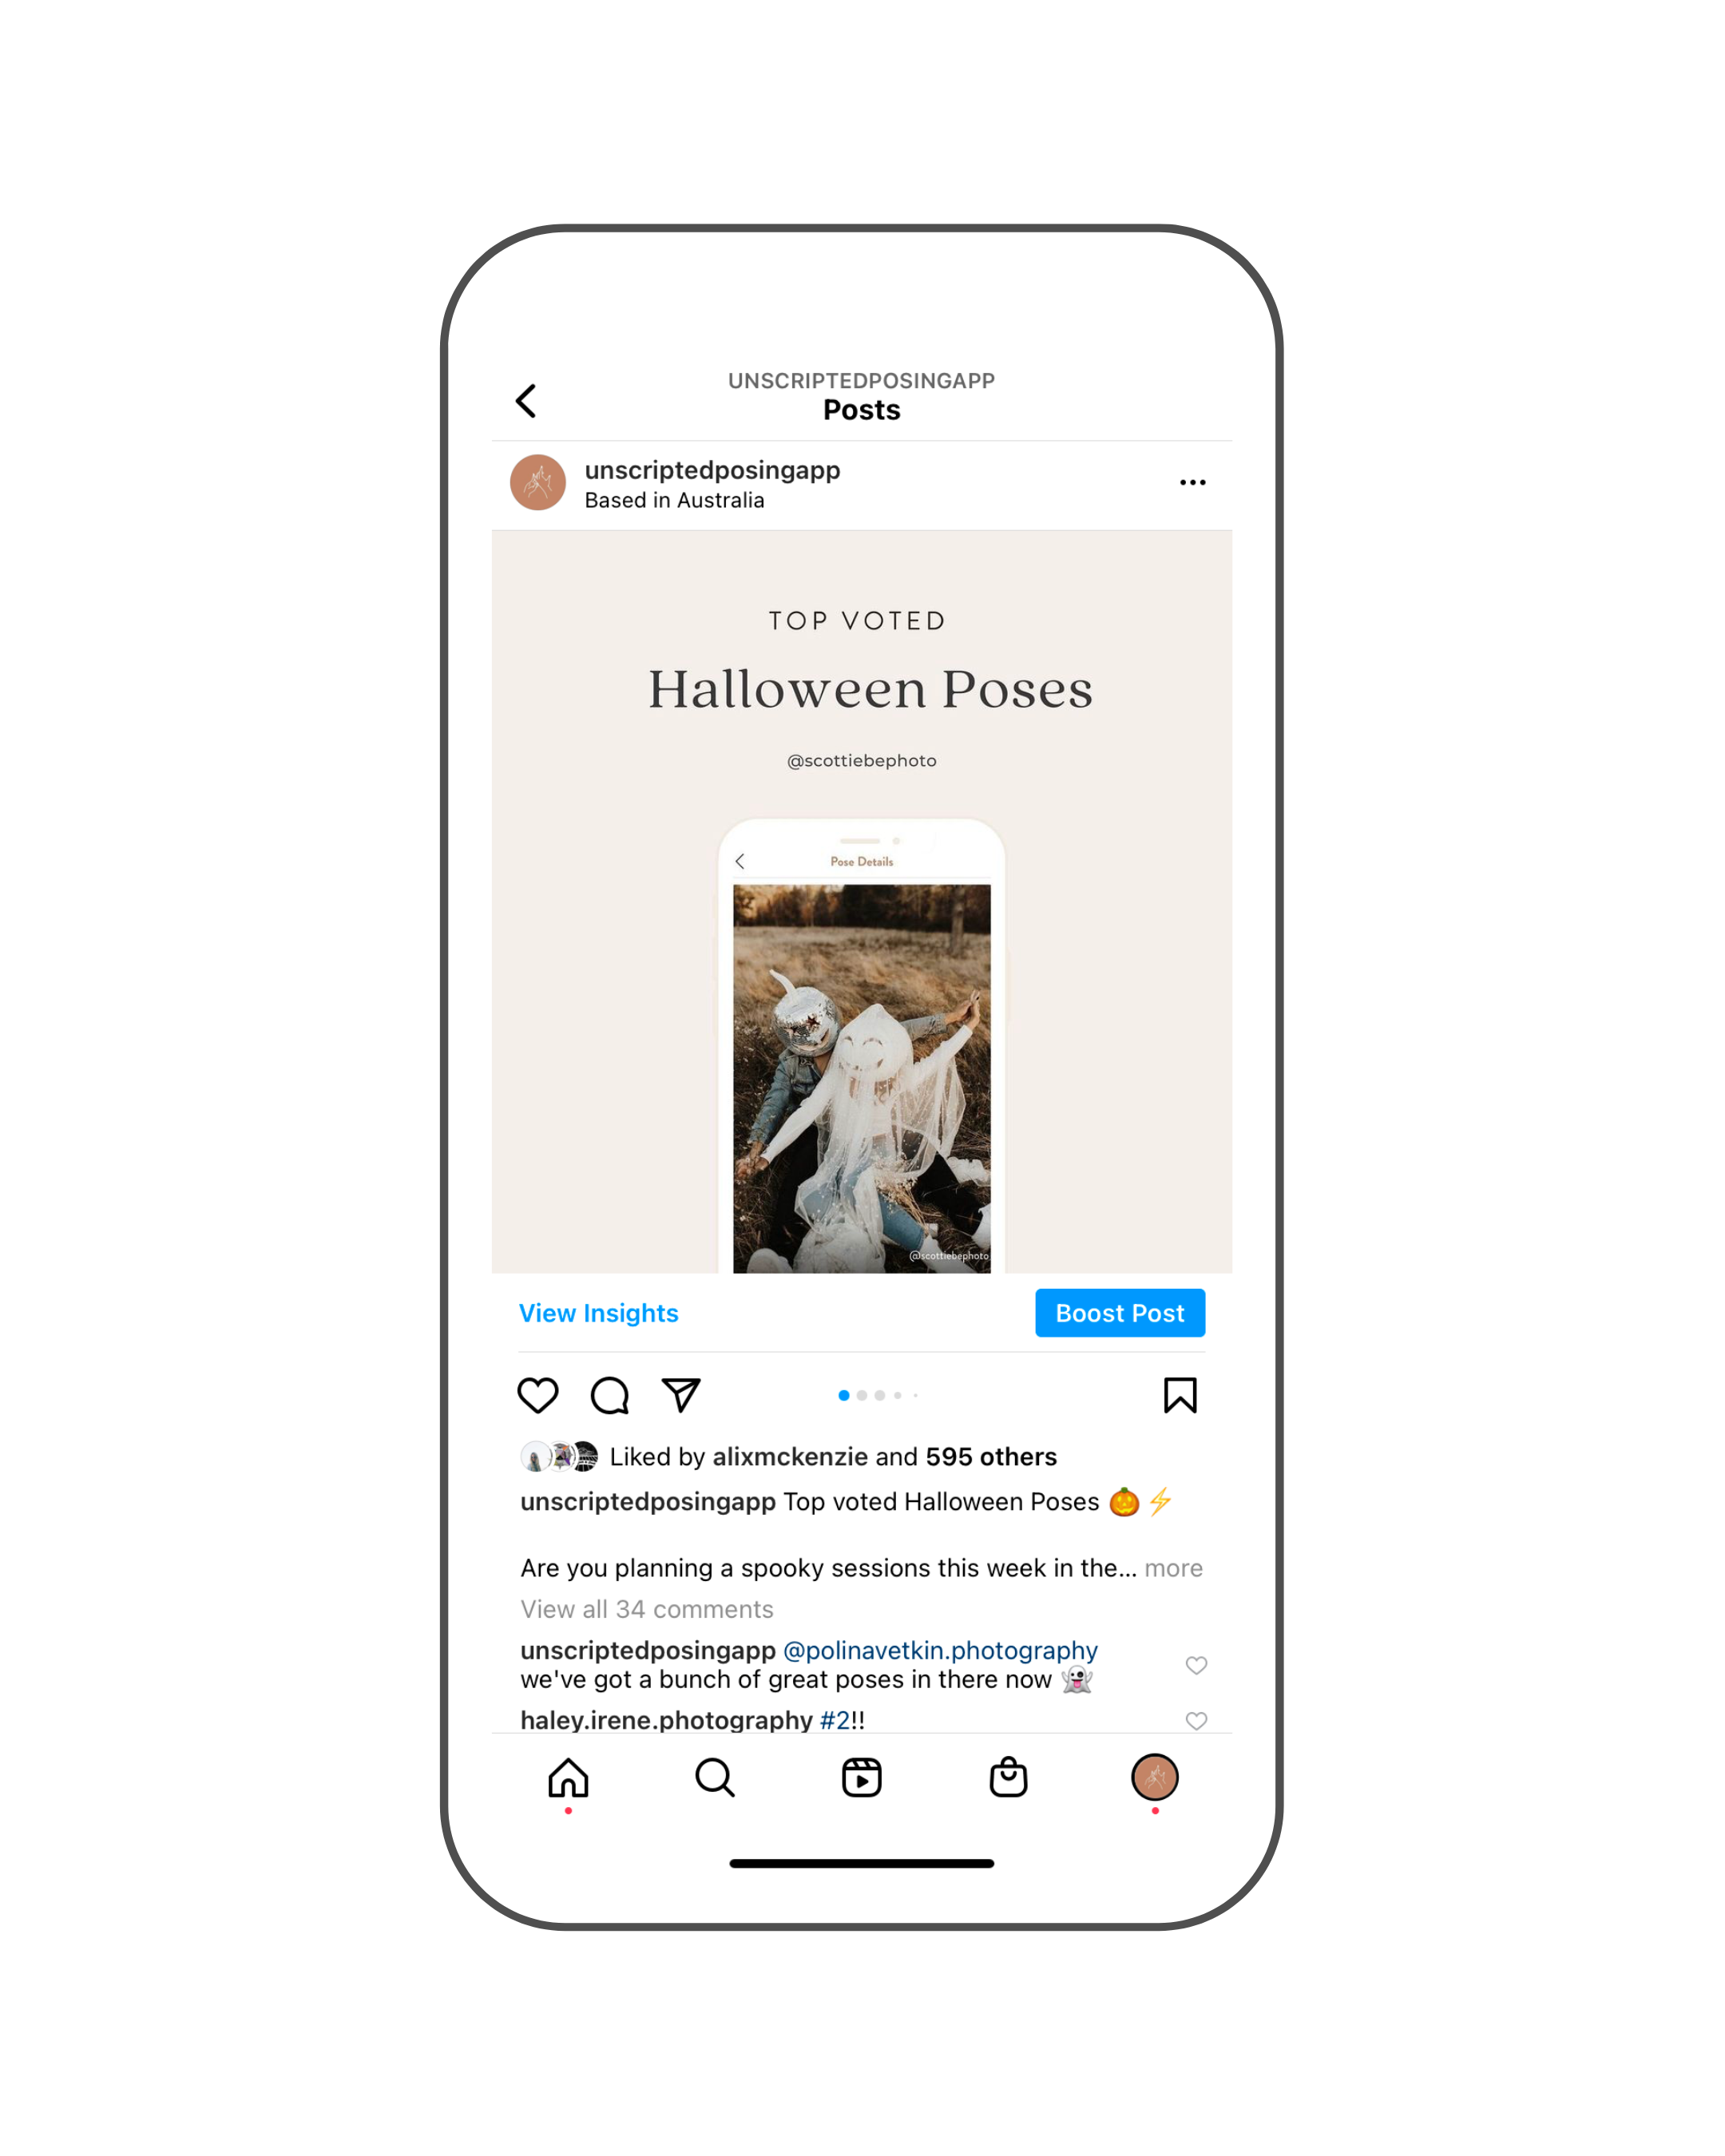 Free AI-Powered Instagram Caption Generator